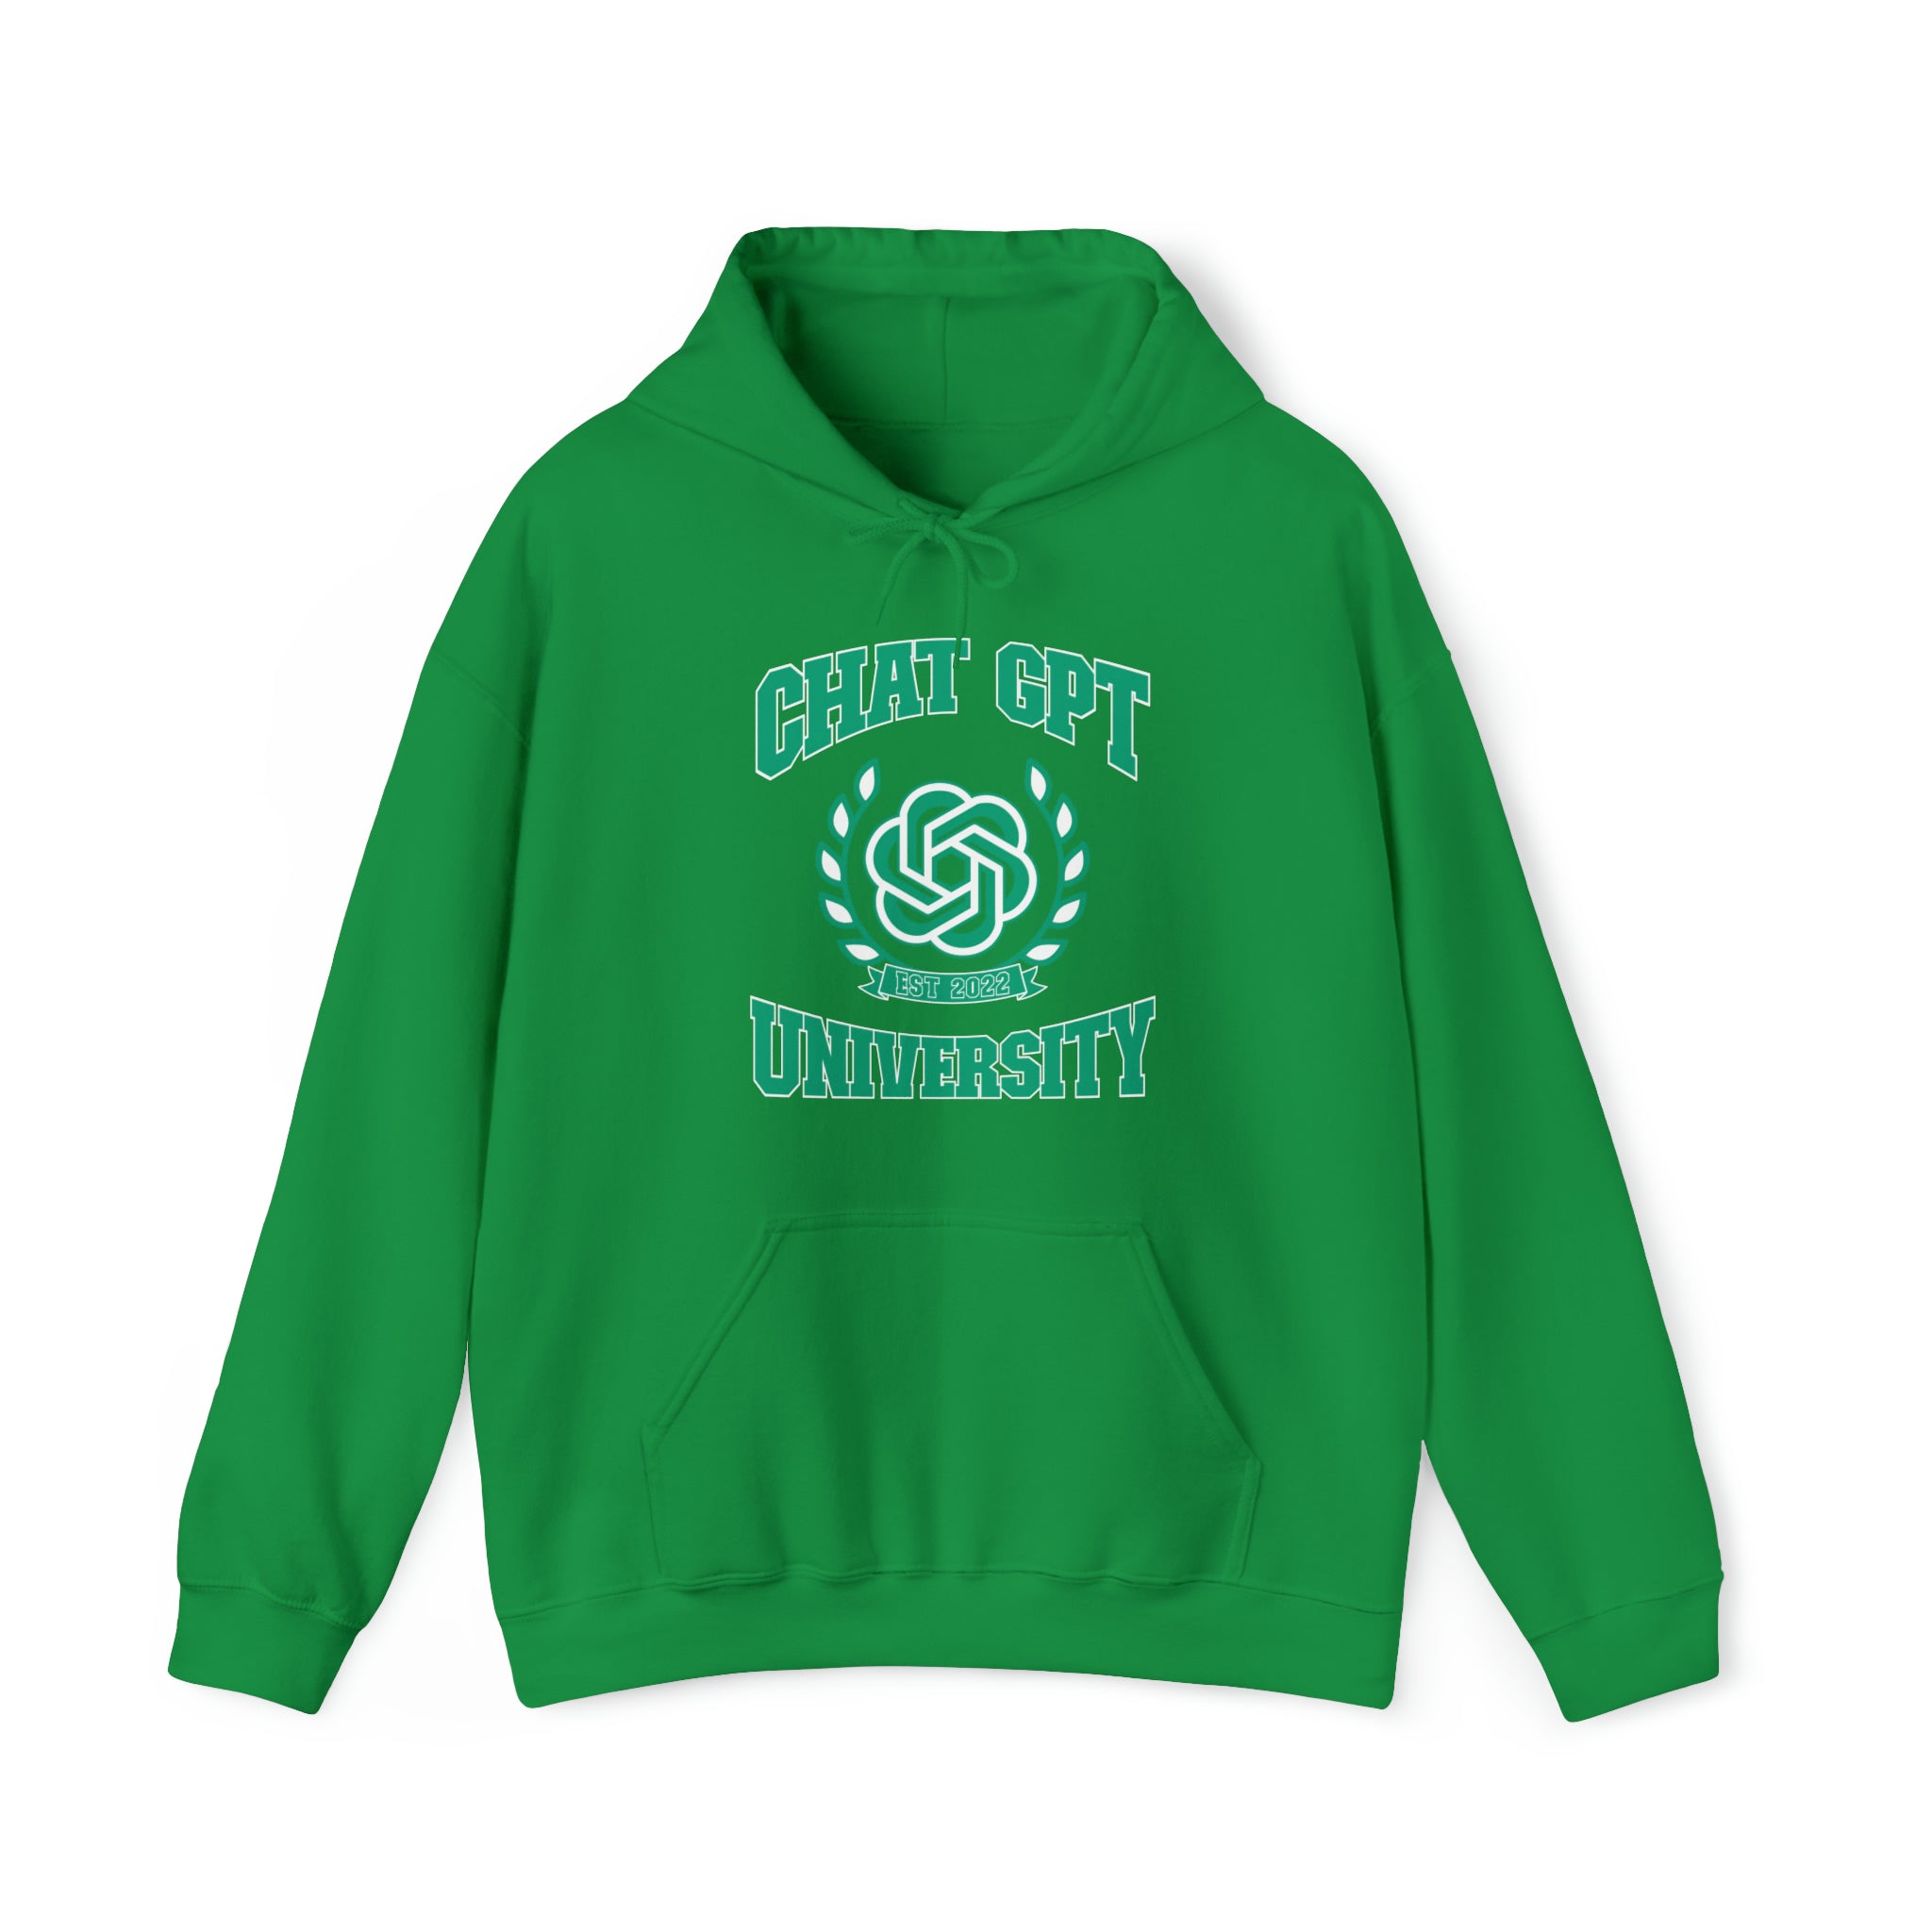 CHAT GPT UNIVERSITY - Unisex Heavy Blend™ Hooded Sweatshirt